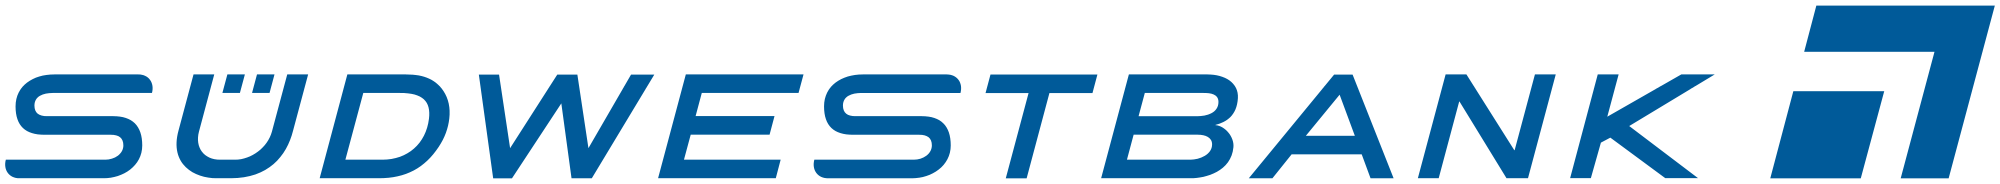 Südwestbank 2011 logo - Aktiv werden